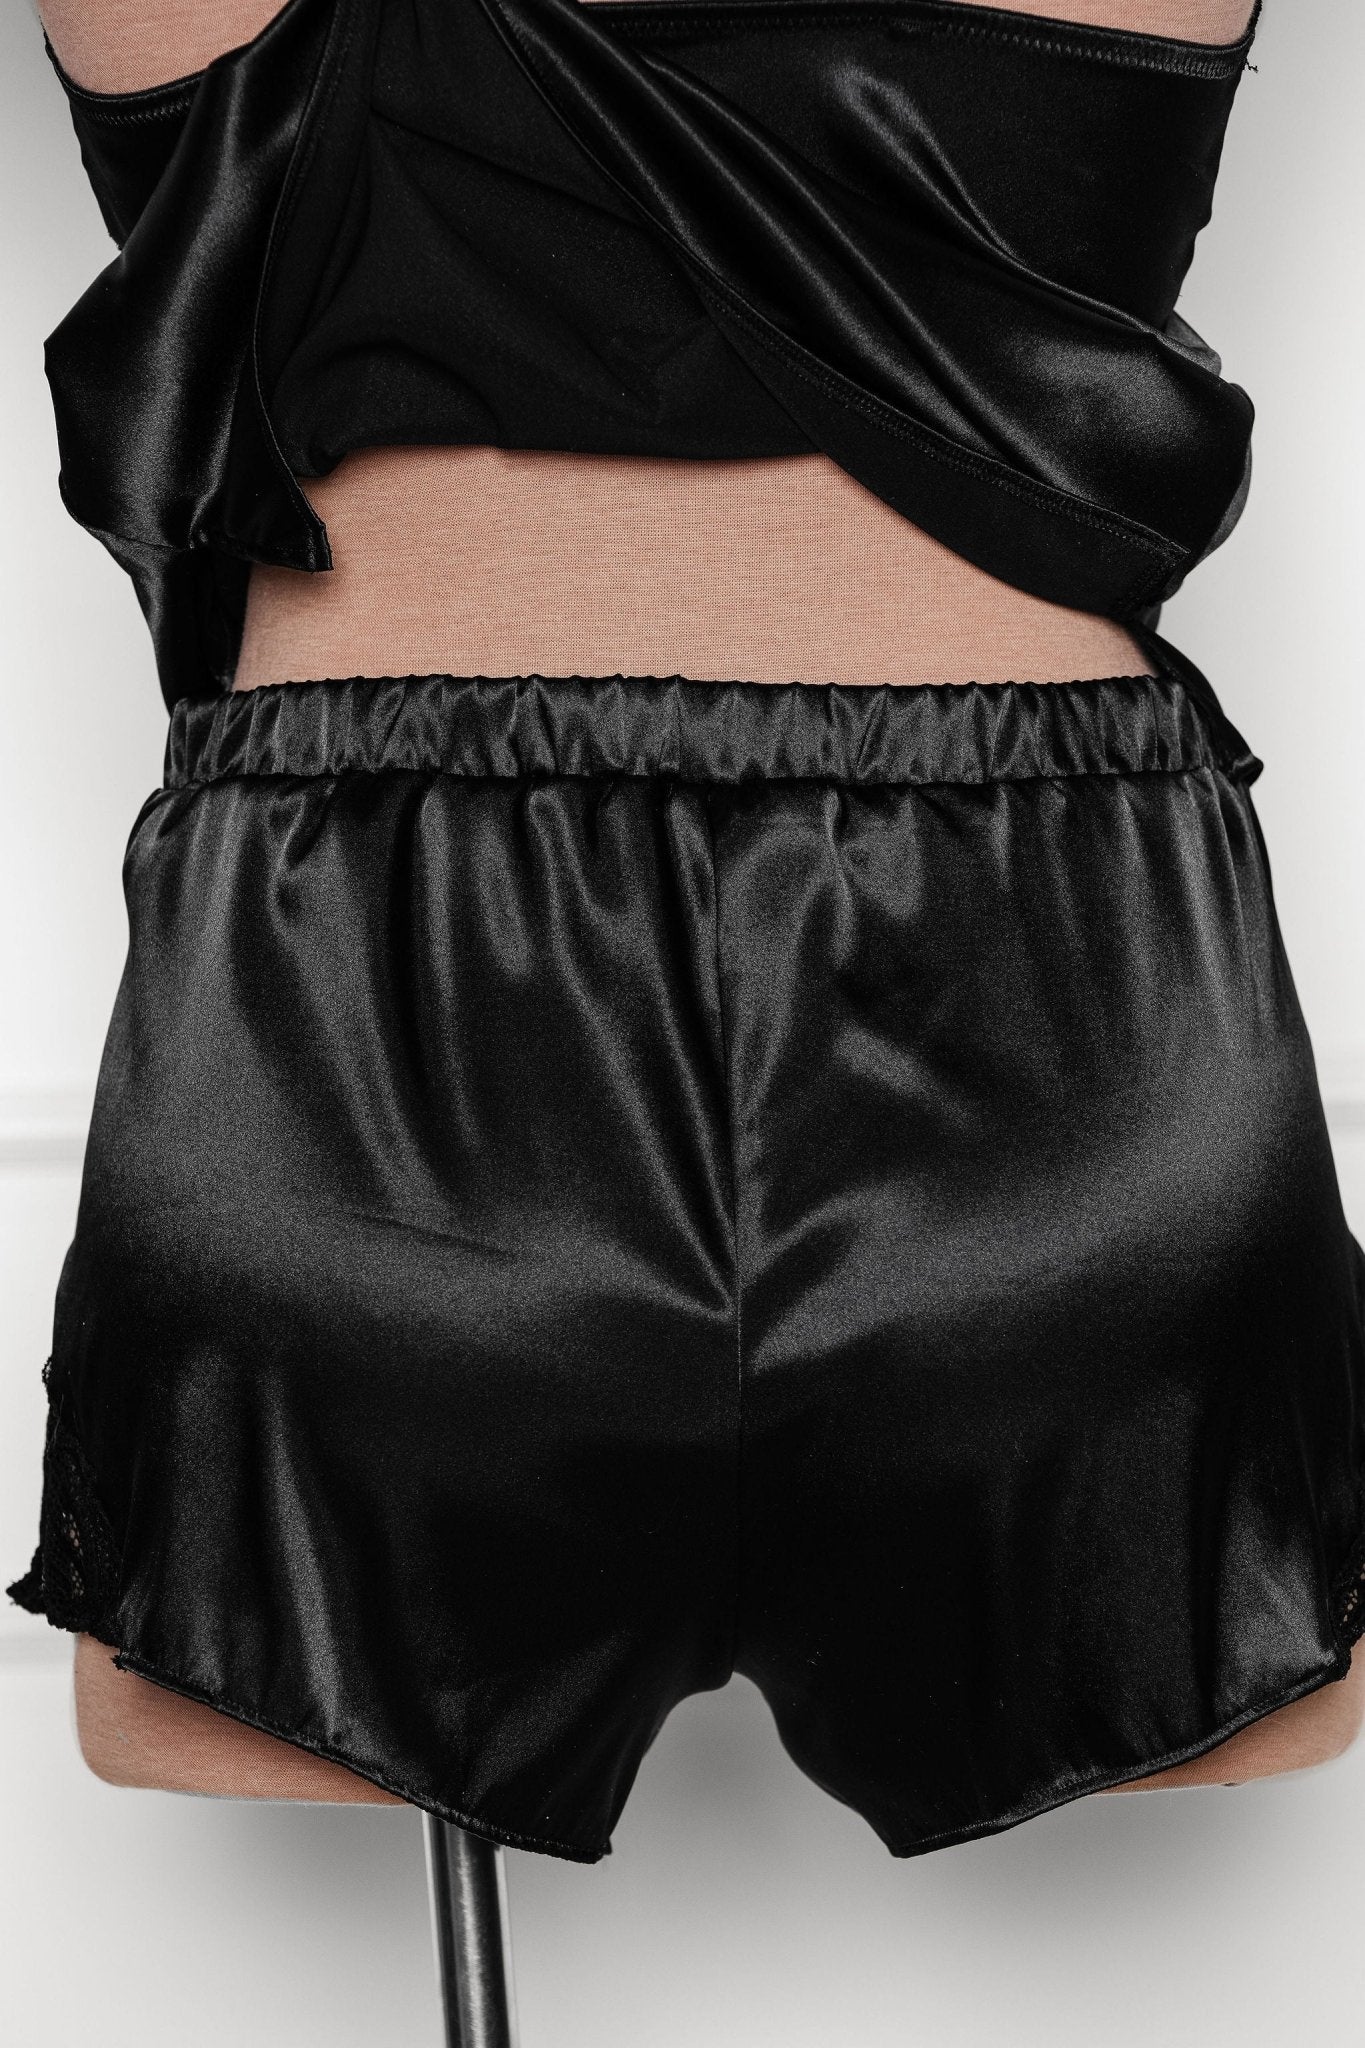 Satin & Lace Shorts - Black - Mentionables